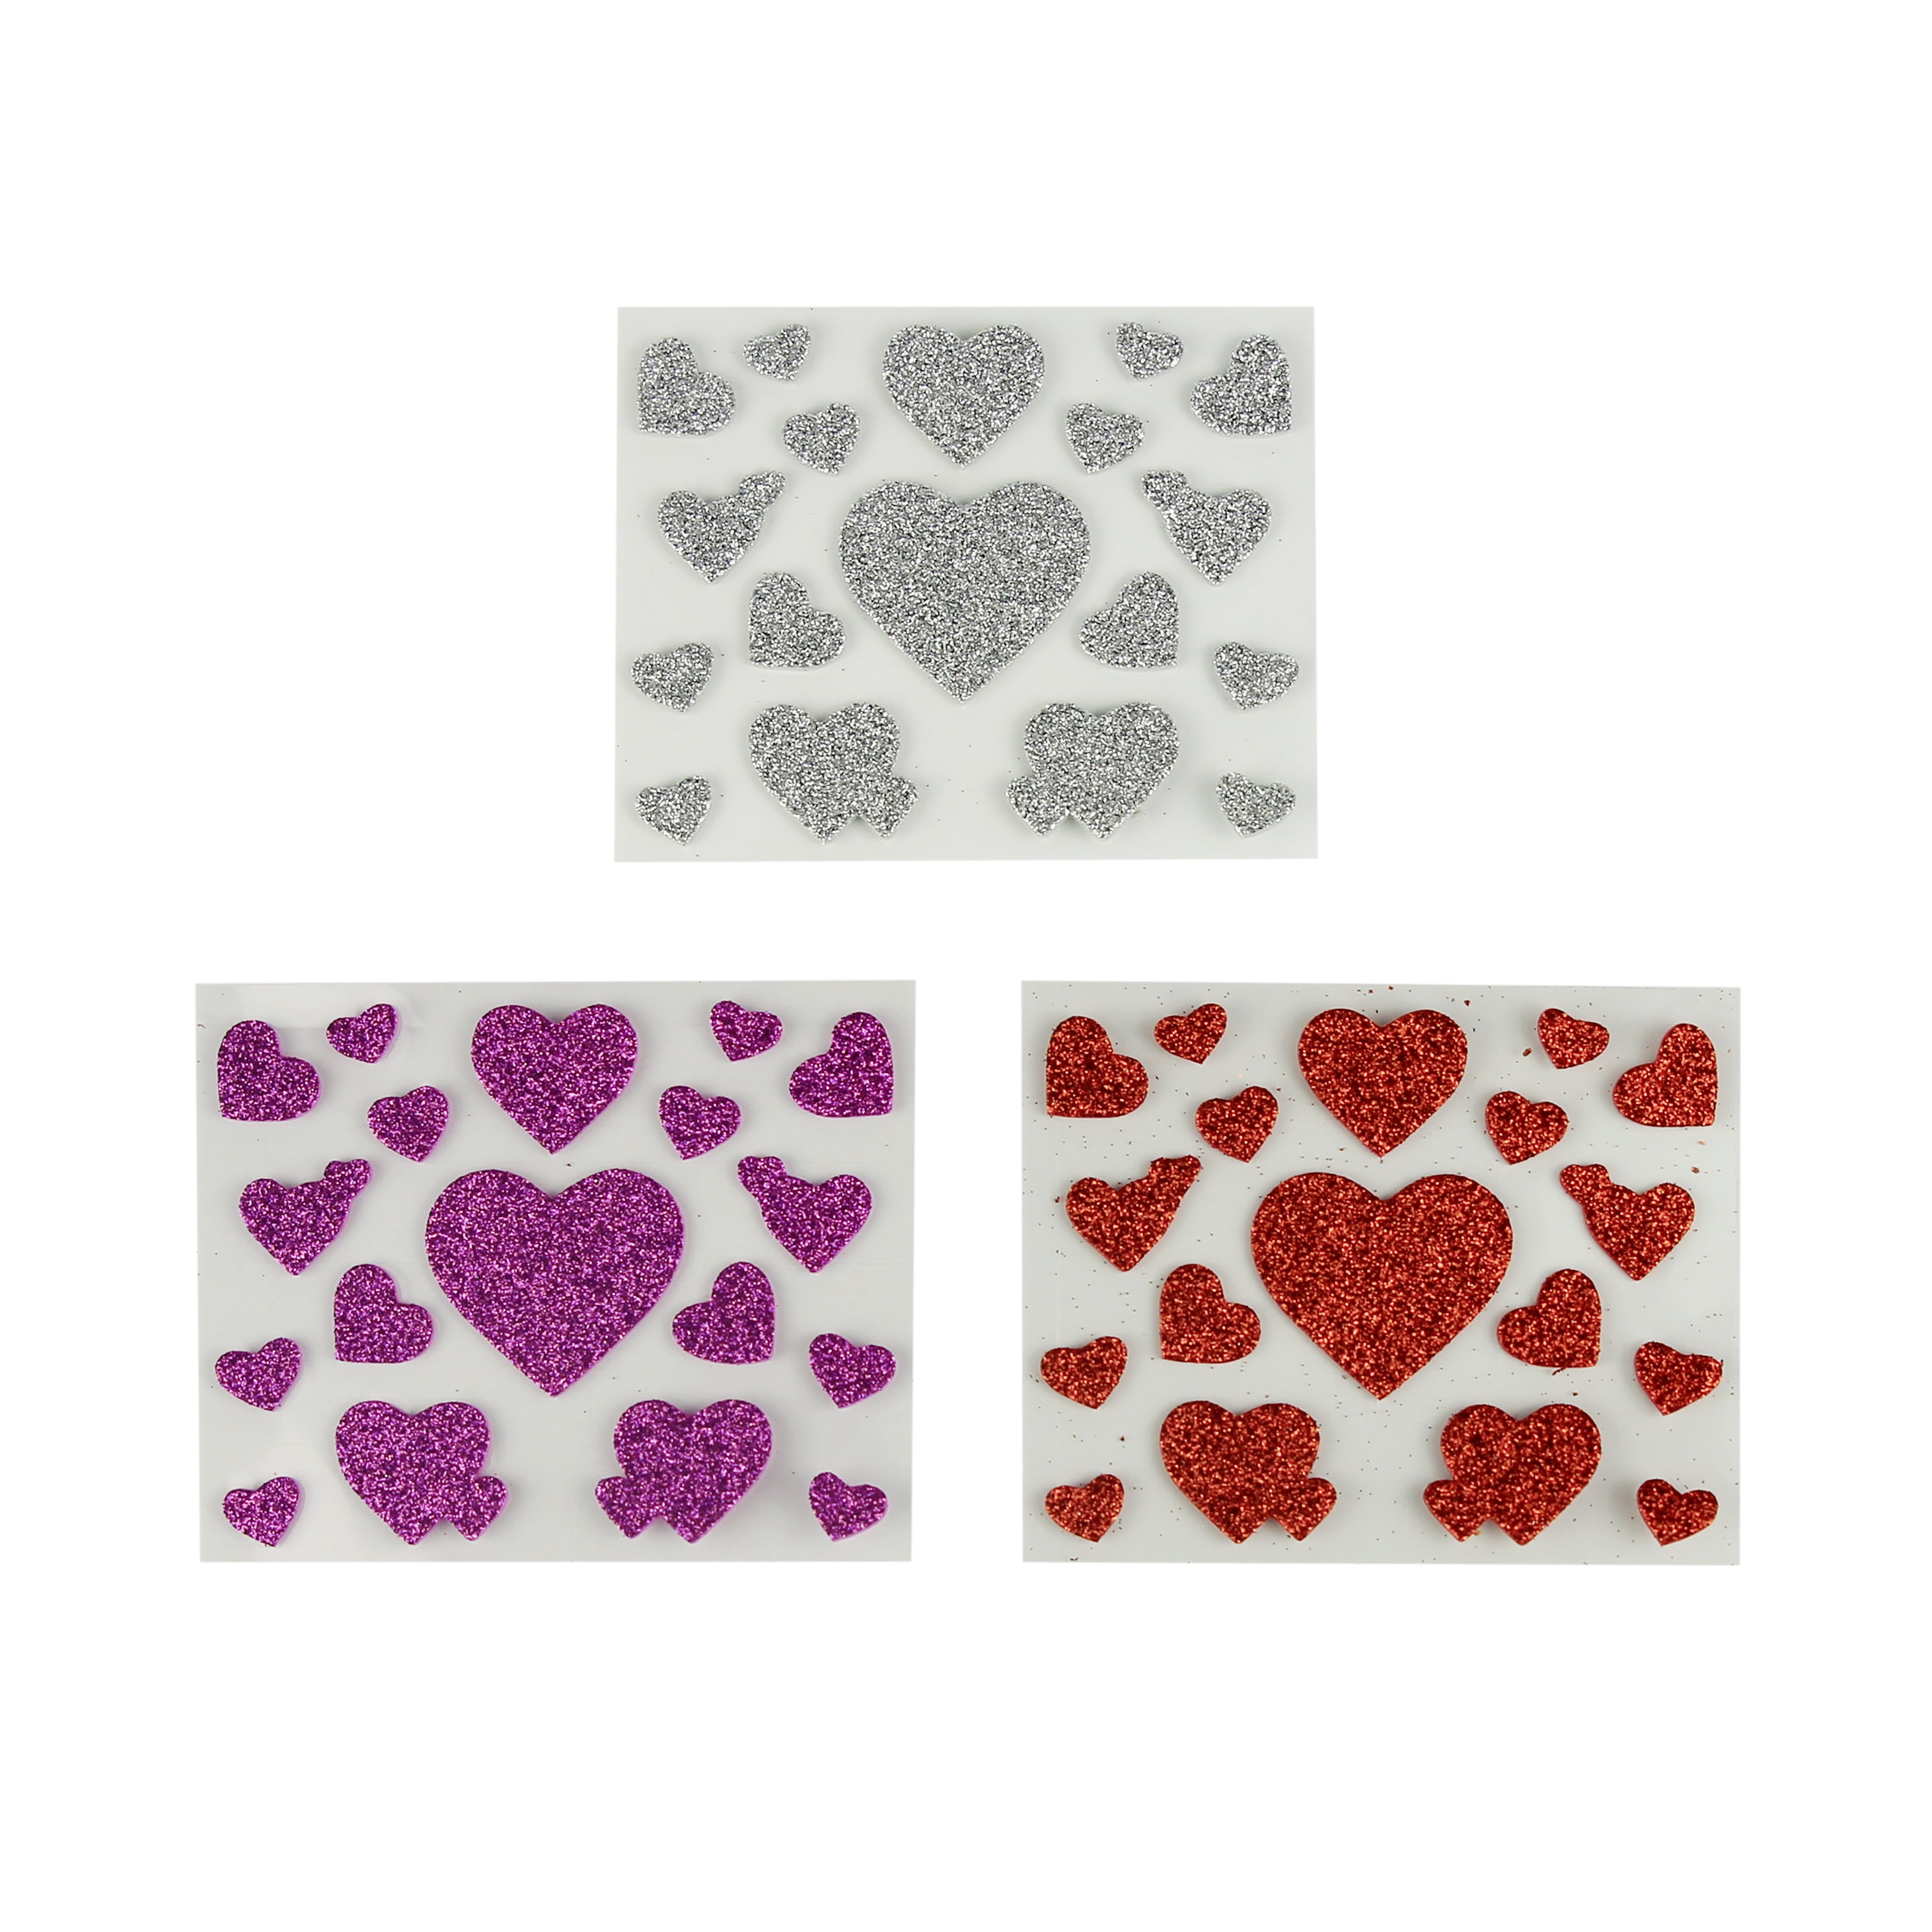 Hello Hobby Multicolor Foam Glitter Star Stickers, 57 Piece 4.5 x